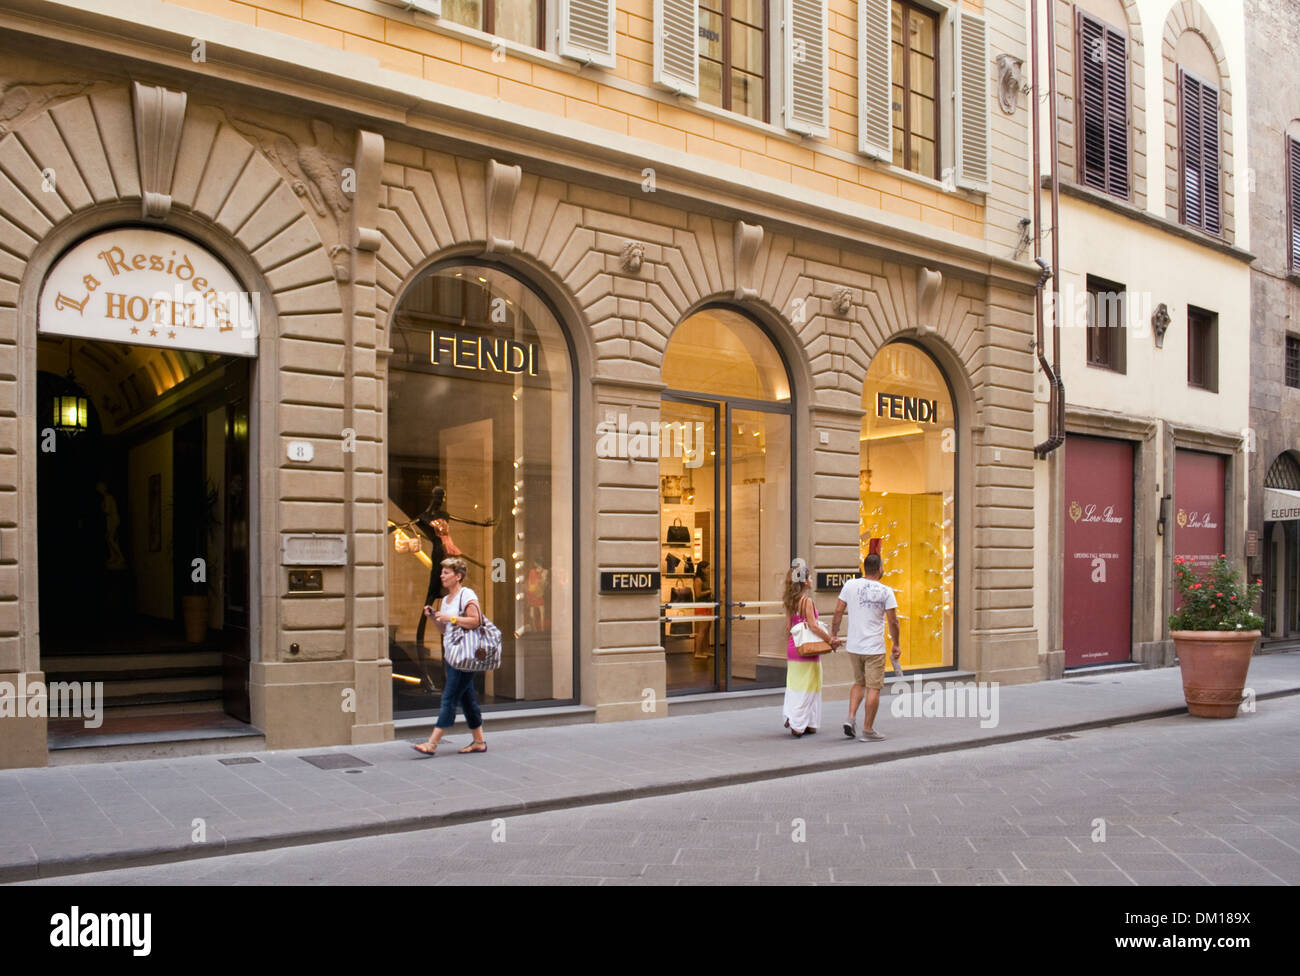 Fendi store, Via Tornabuoni, Firenze, Italia Foto stock - Alamy